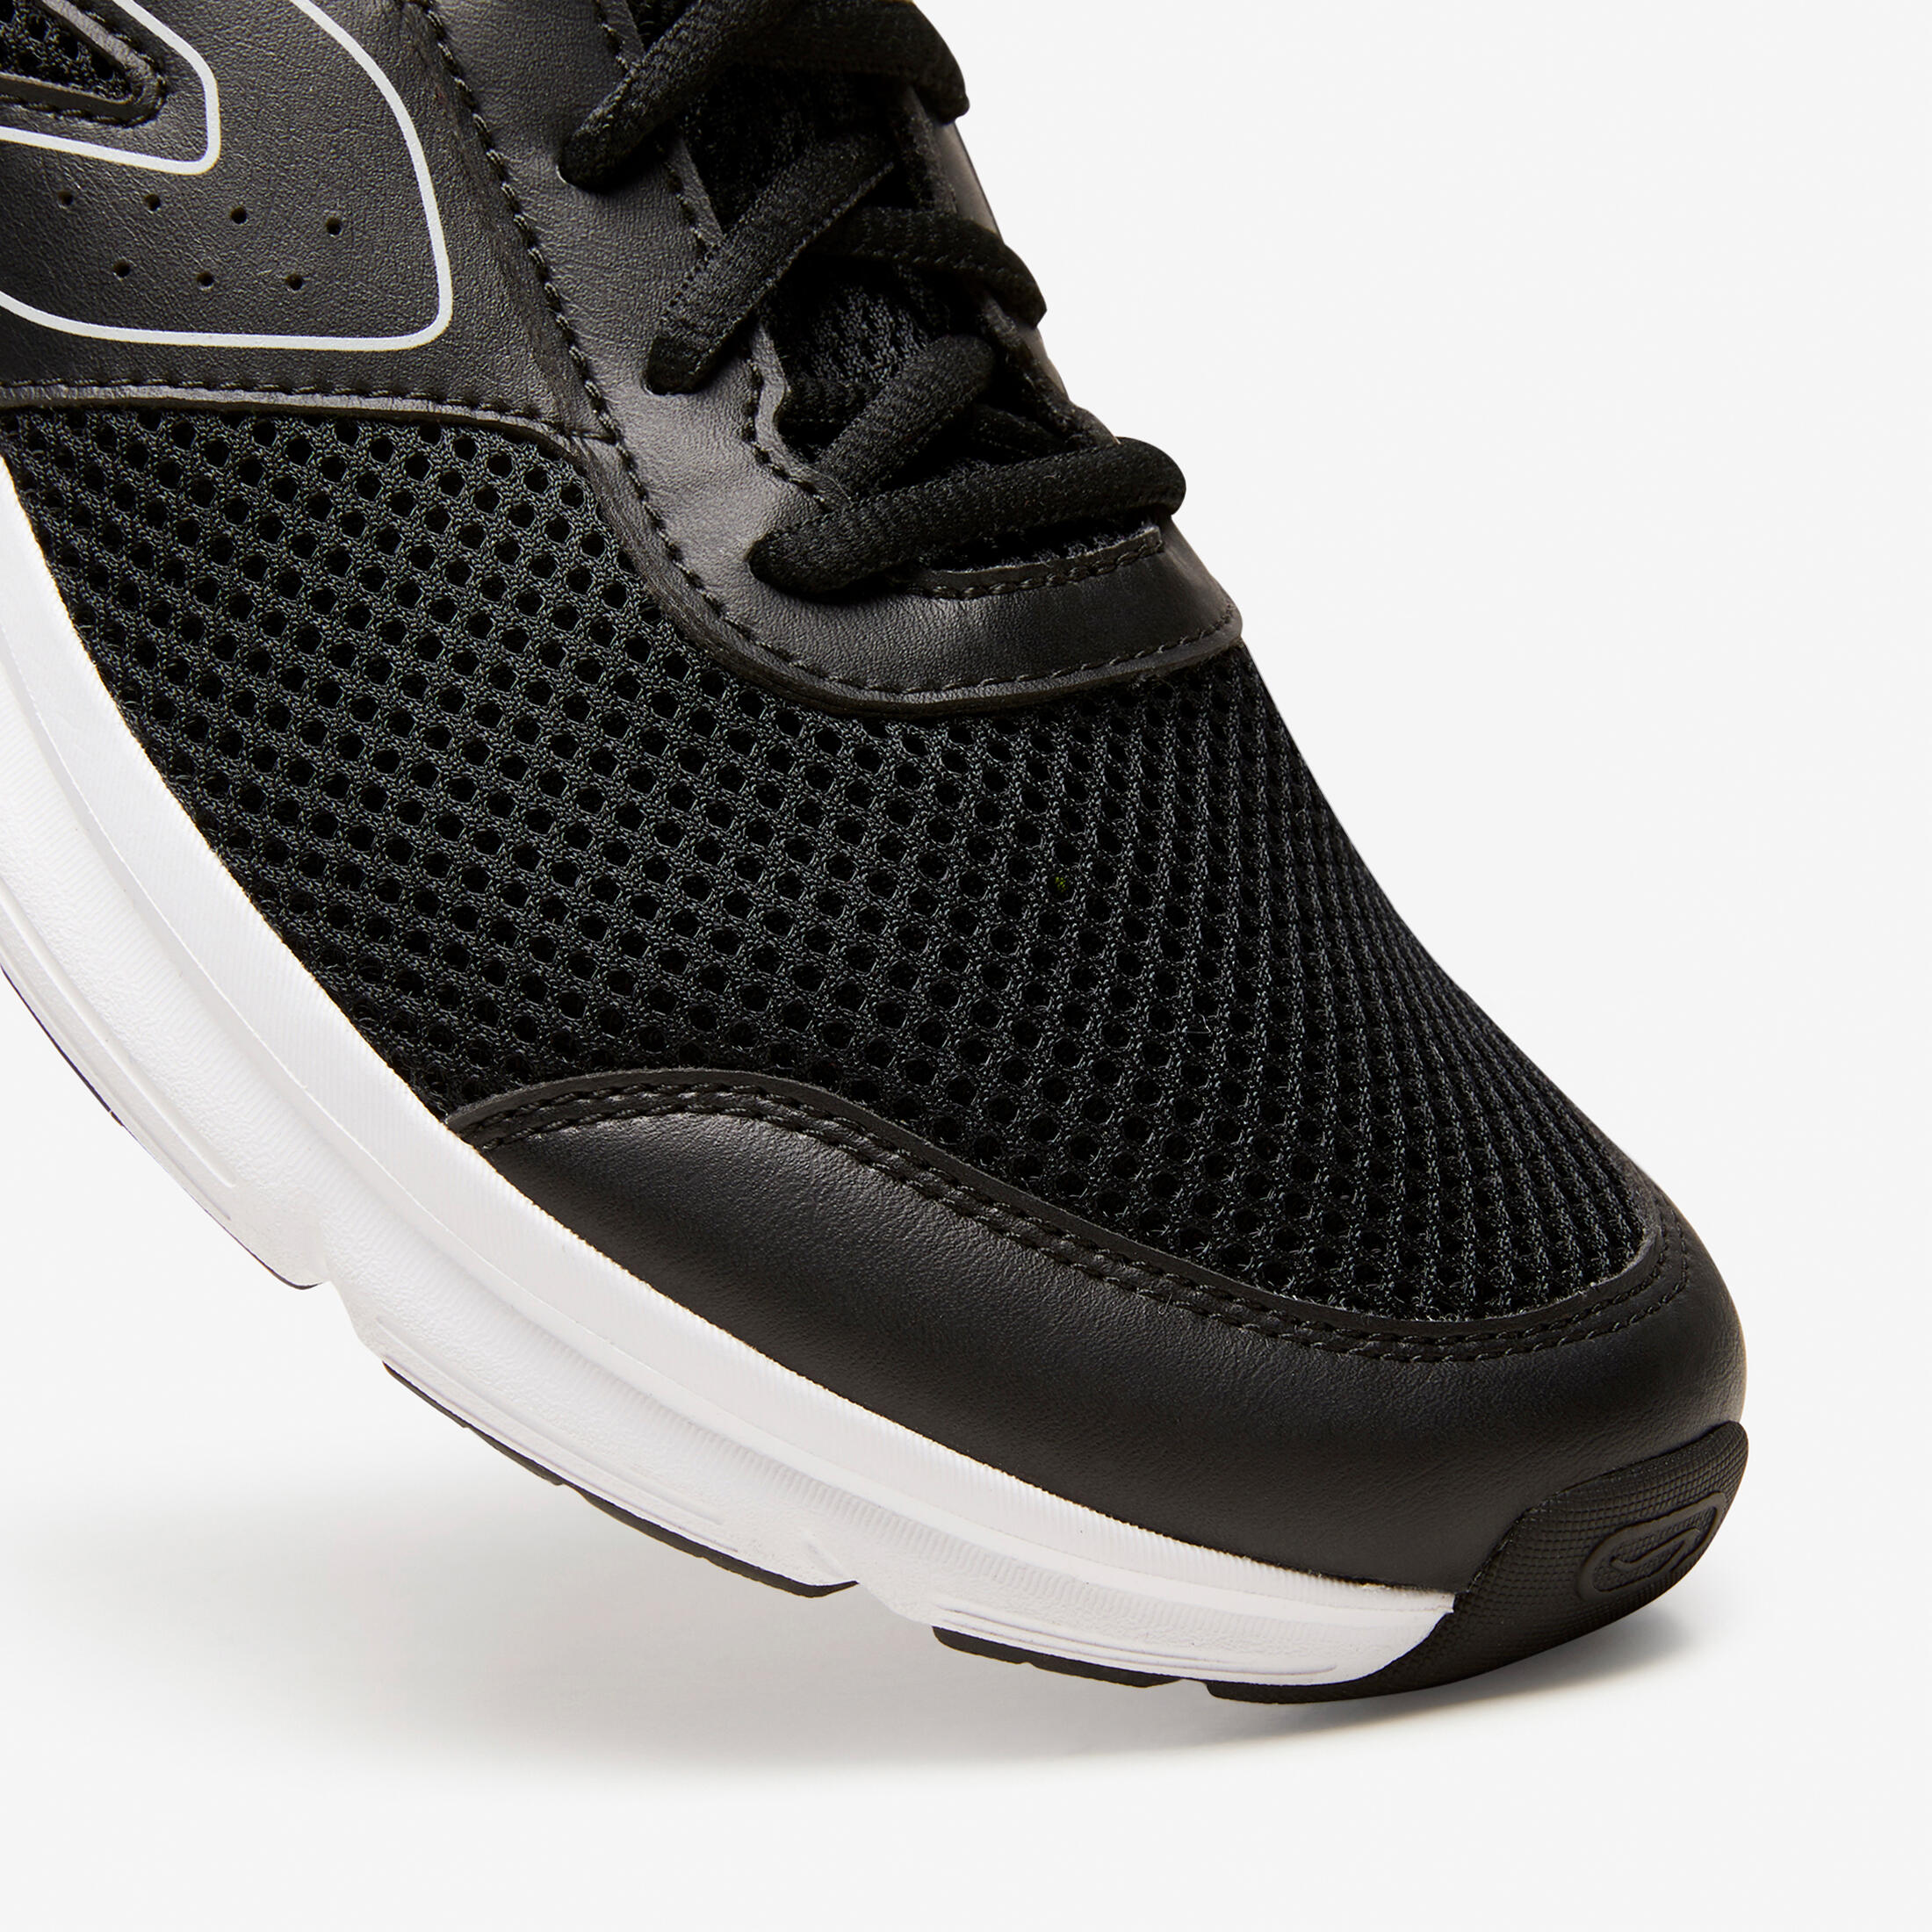 Buy Men's Running Shoes Run Cushion - Black/Grey Online